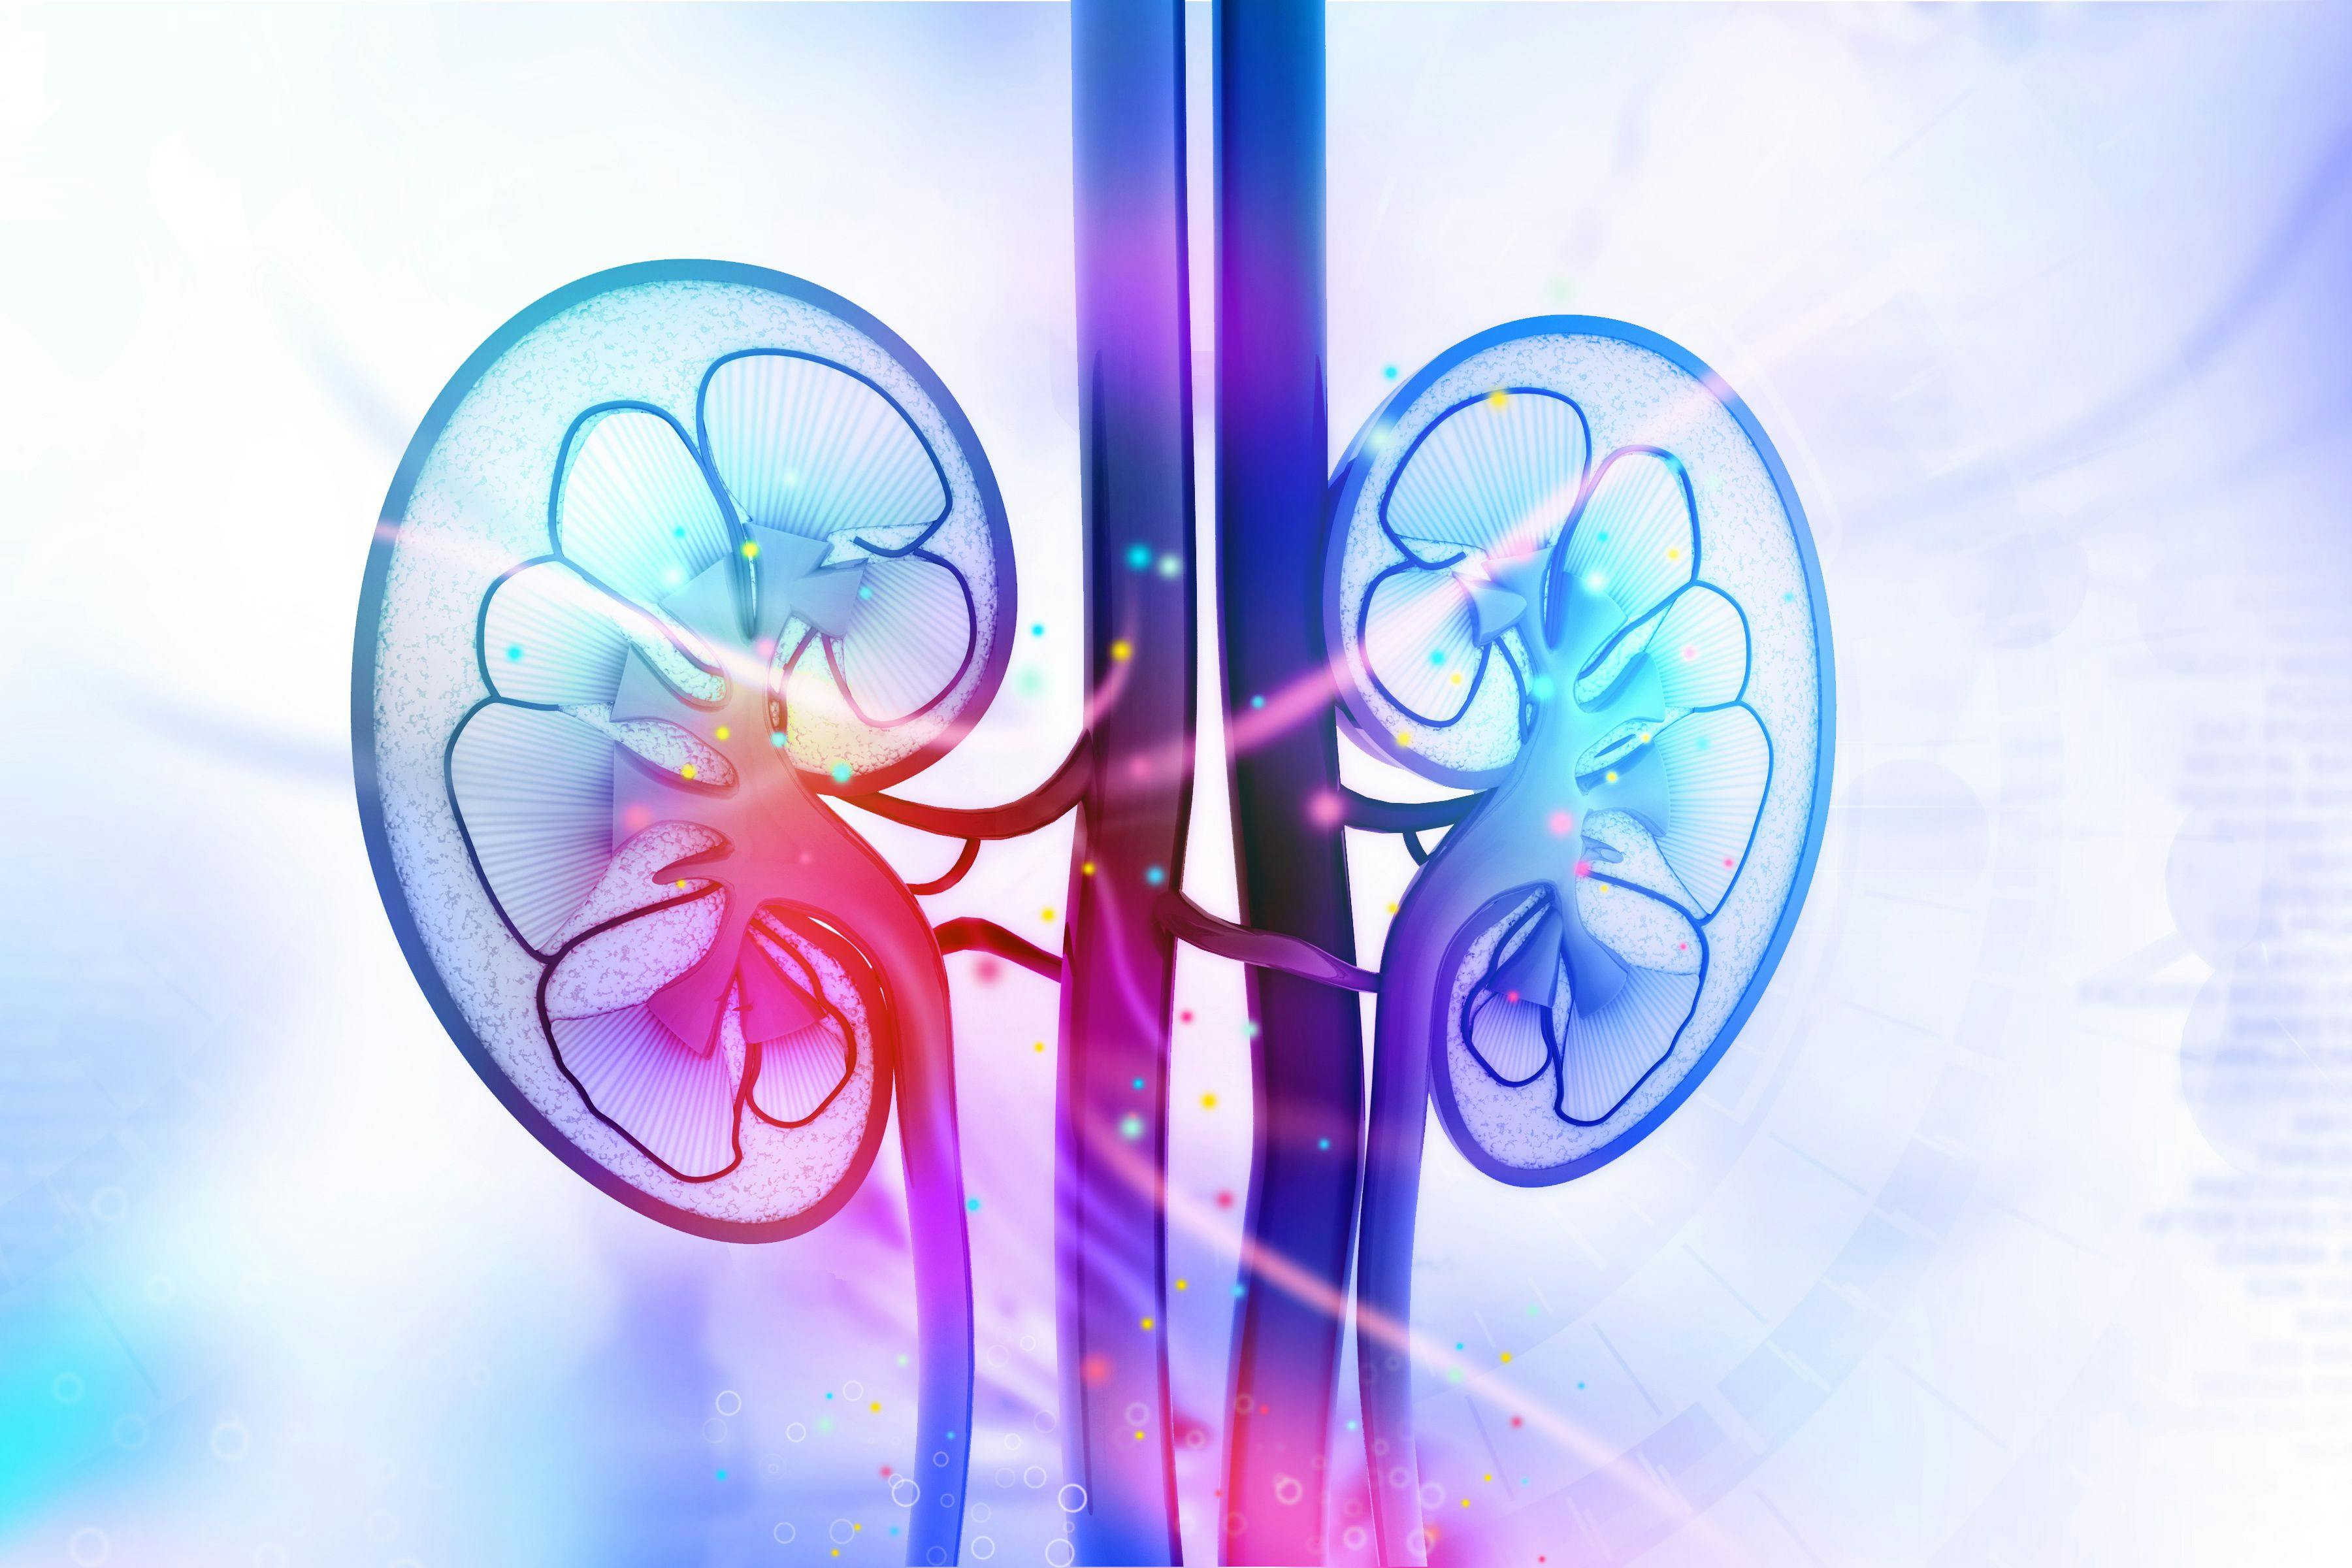 Illustration of human kidneys